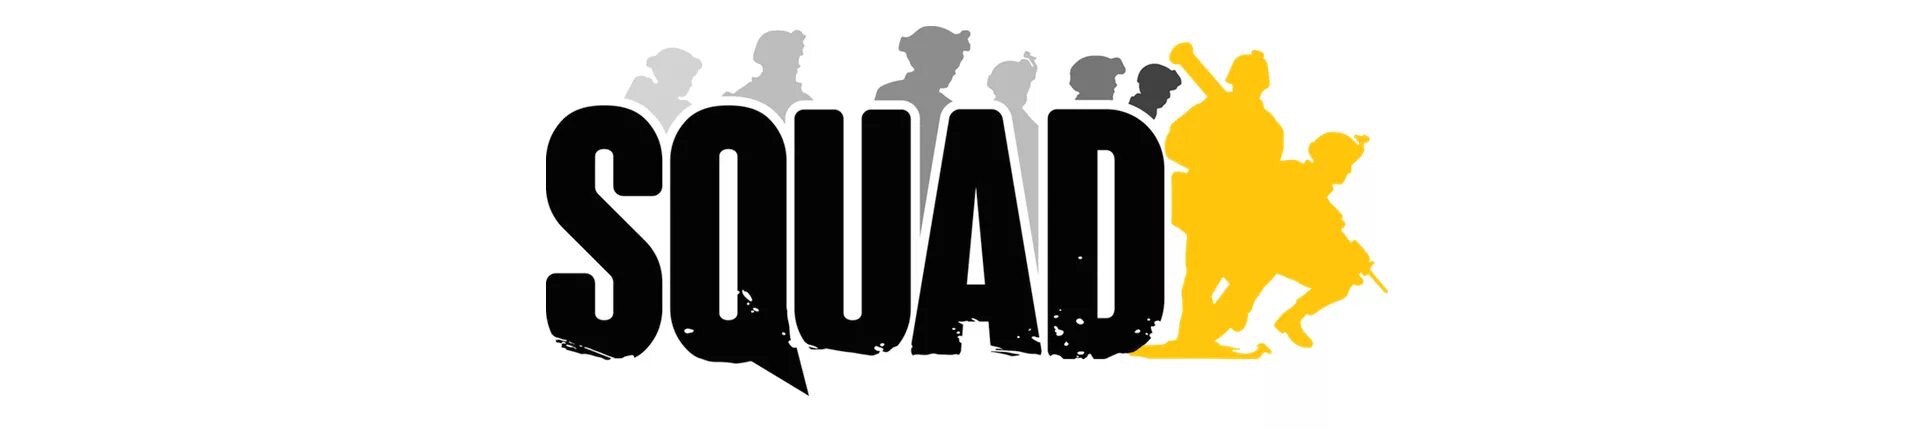 Команды в сквад. Squad надпись. Сквад логотип. Лого для игрового сервера. Логотип игрового сервера.